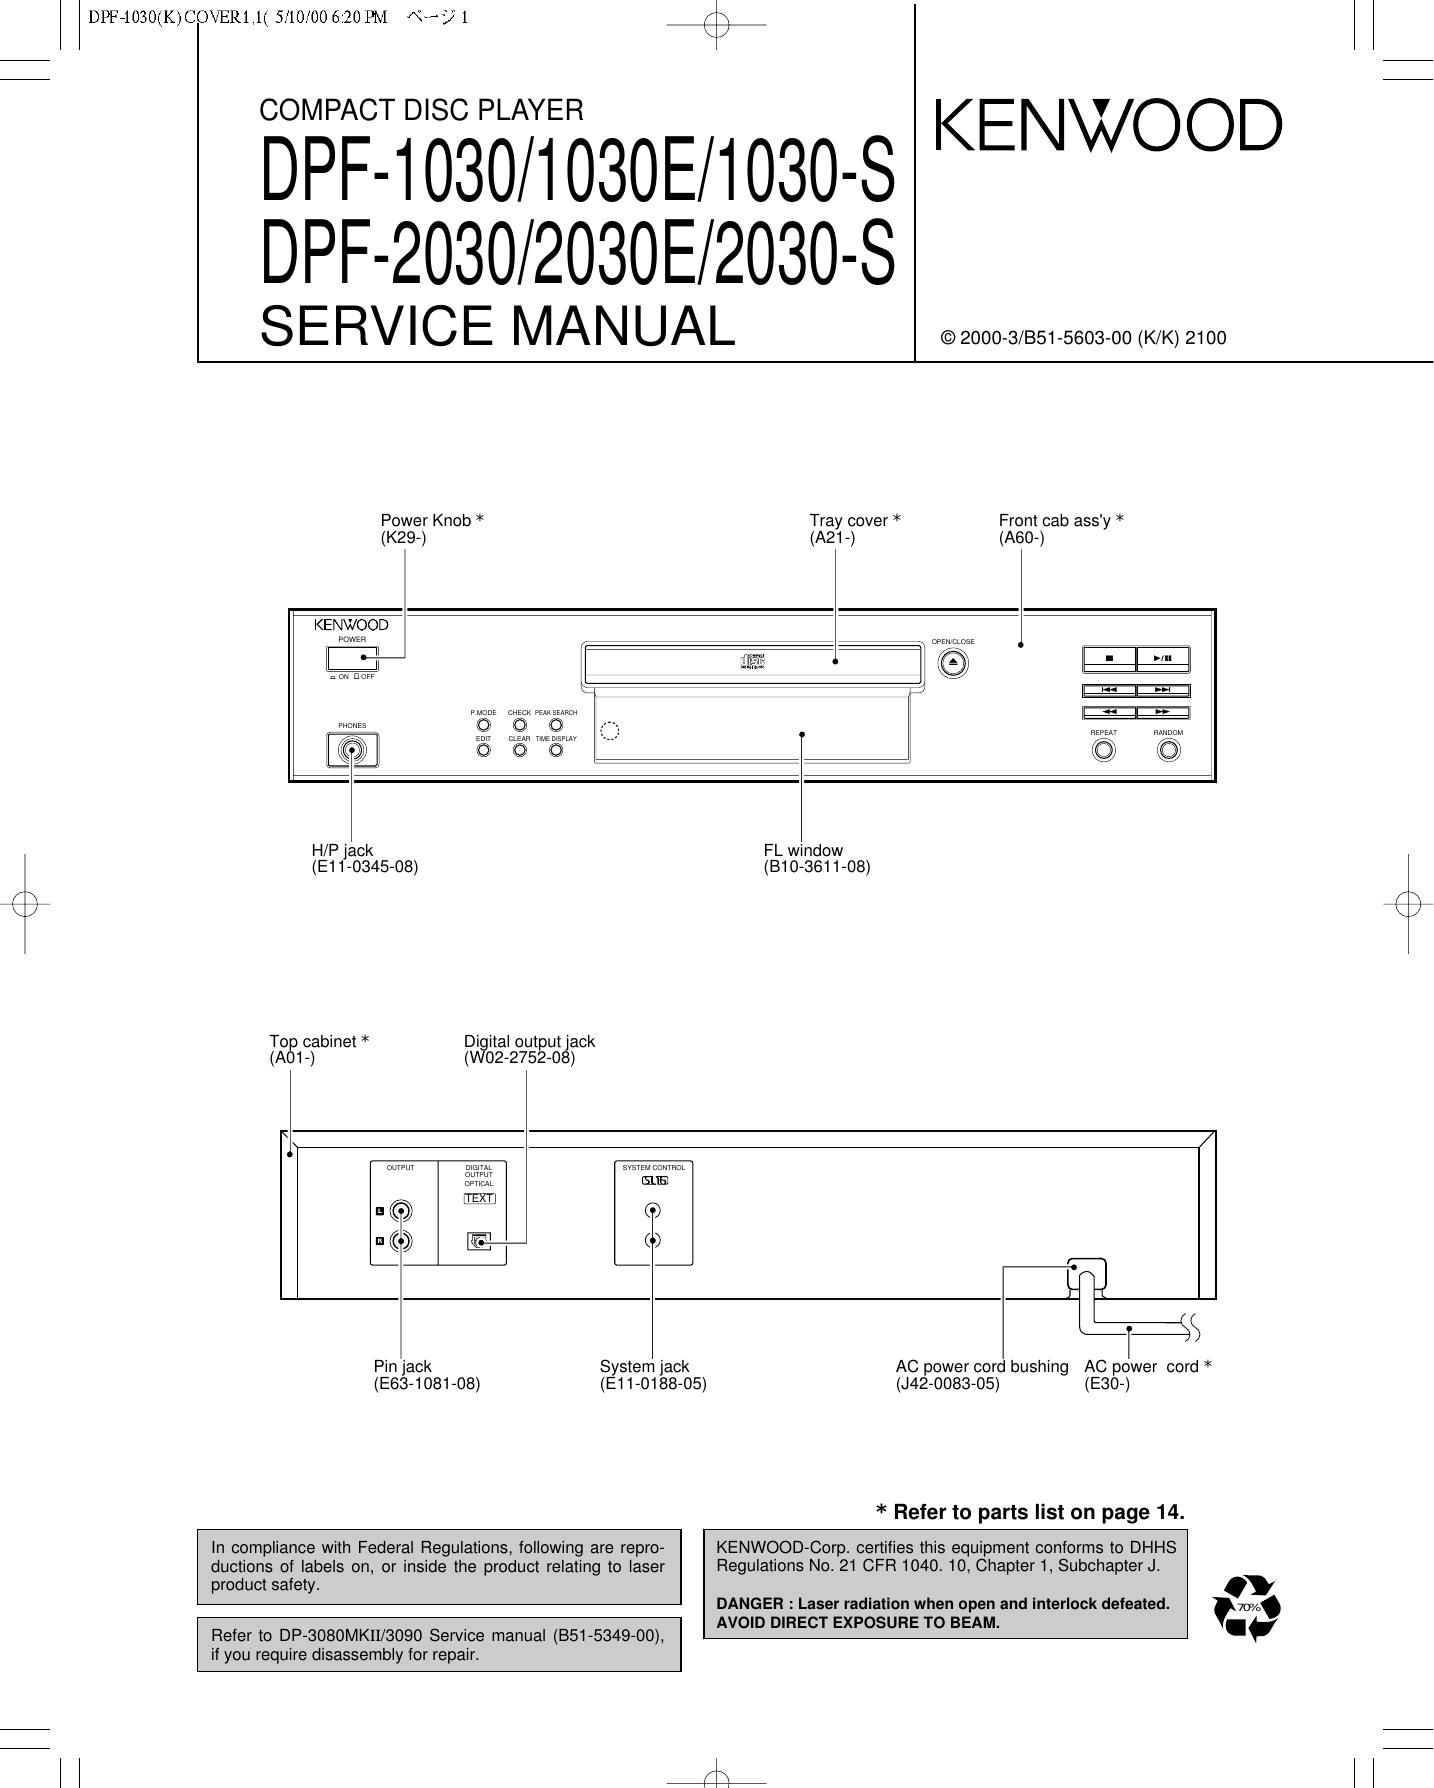 Kenwood DPF 1030 S Service Manual